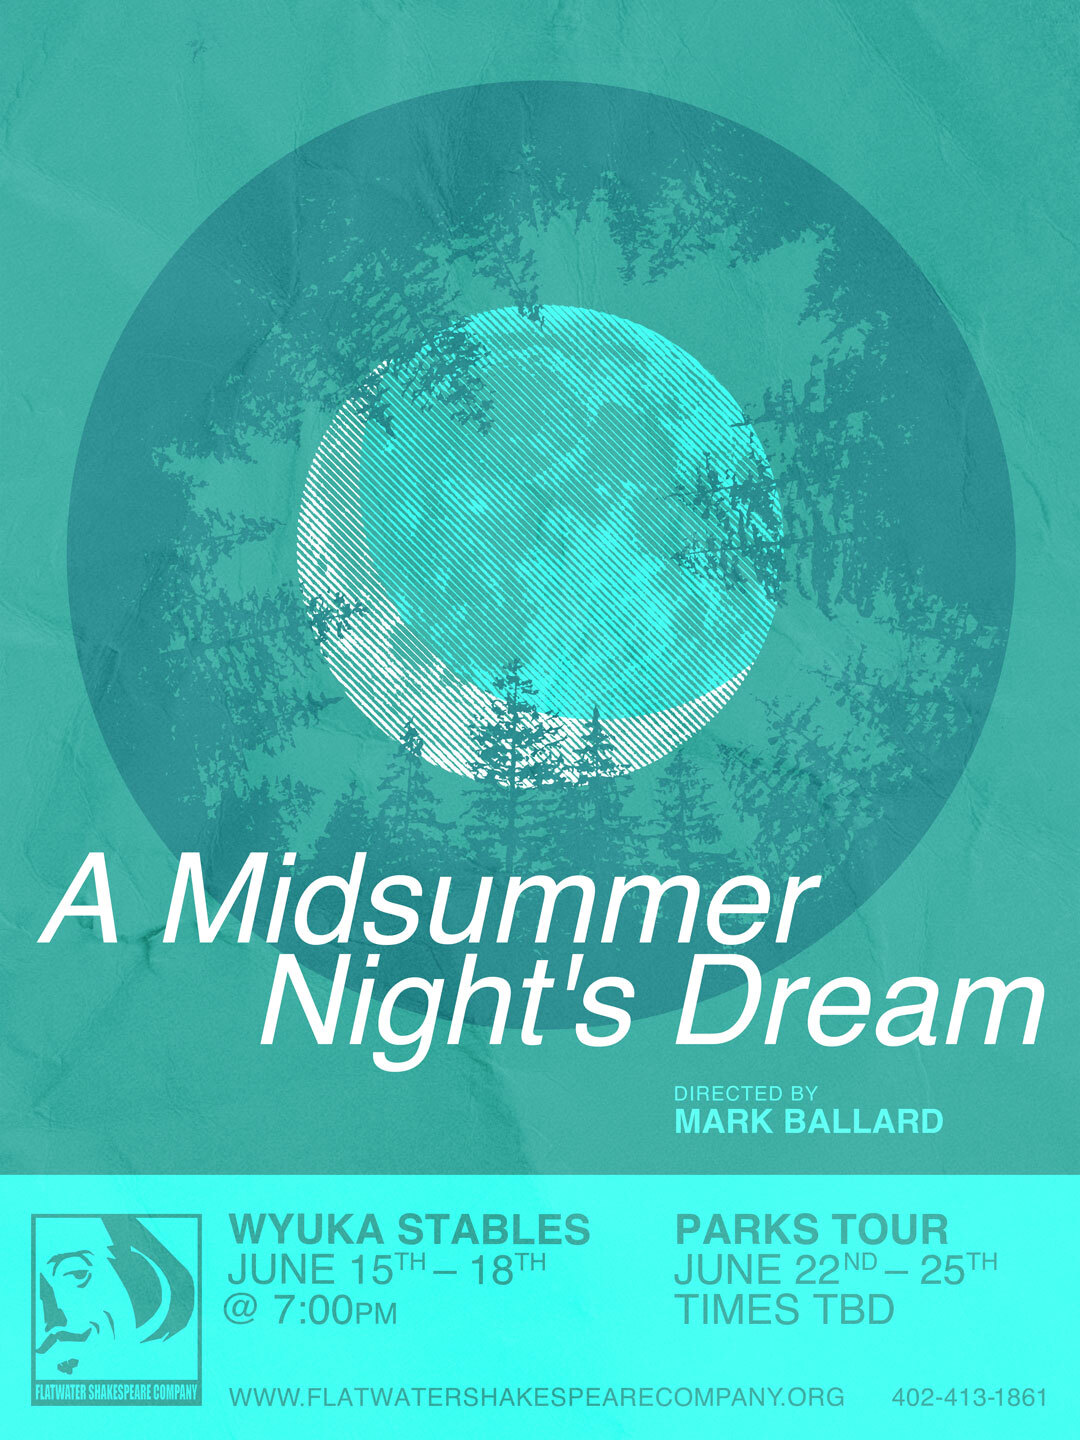 6/17 ADU - ADULT: Sat. June 17, 2023 | 7:00 p.m. - 9:00 p.m. CST | Wyuka Stables (A Midsummer Night's Dream)